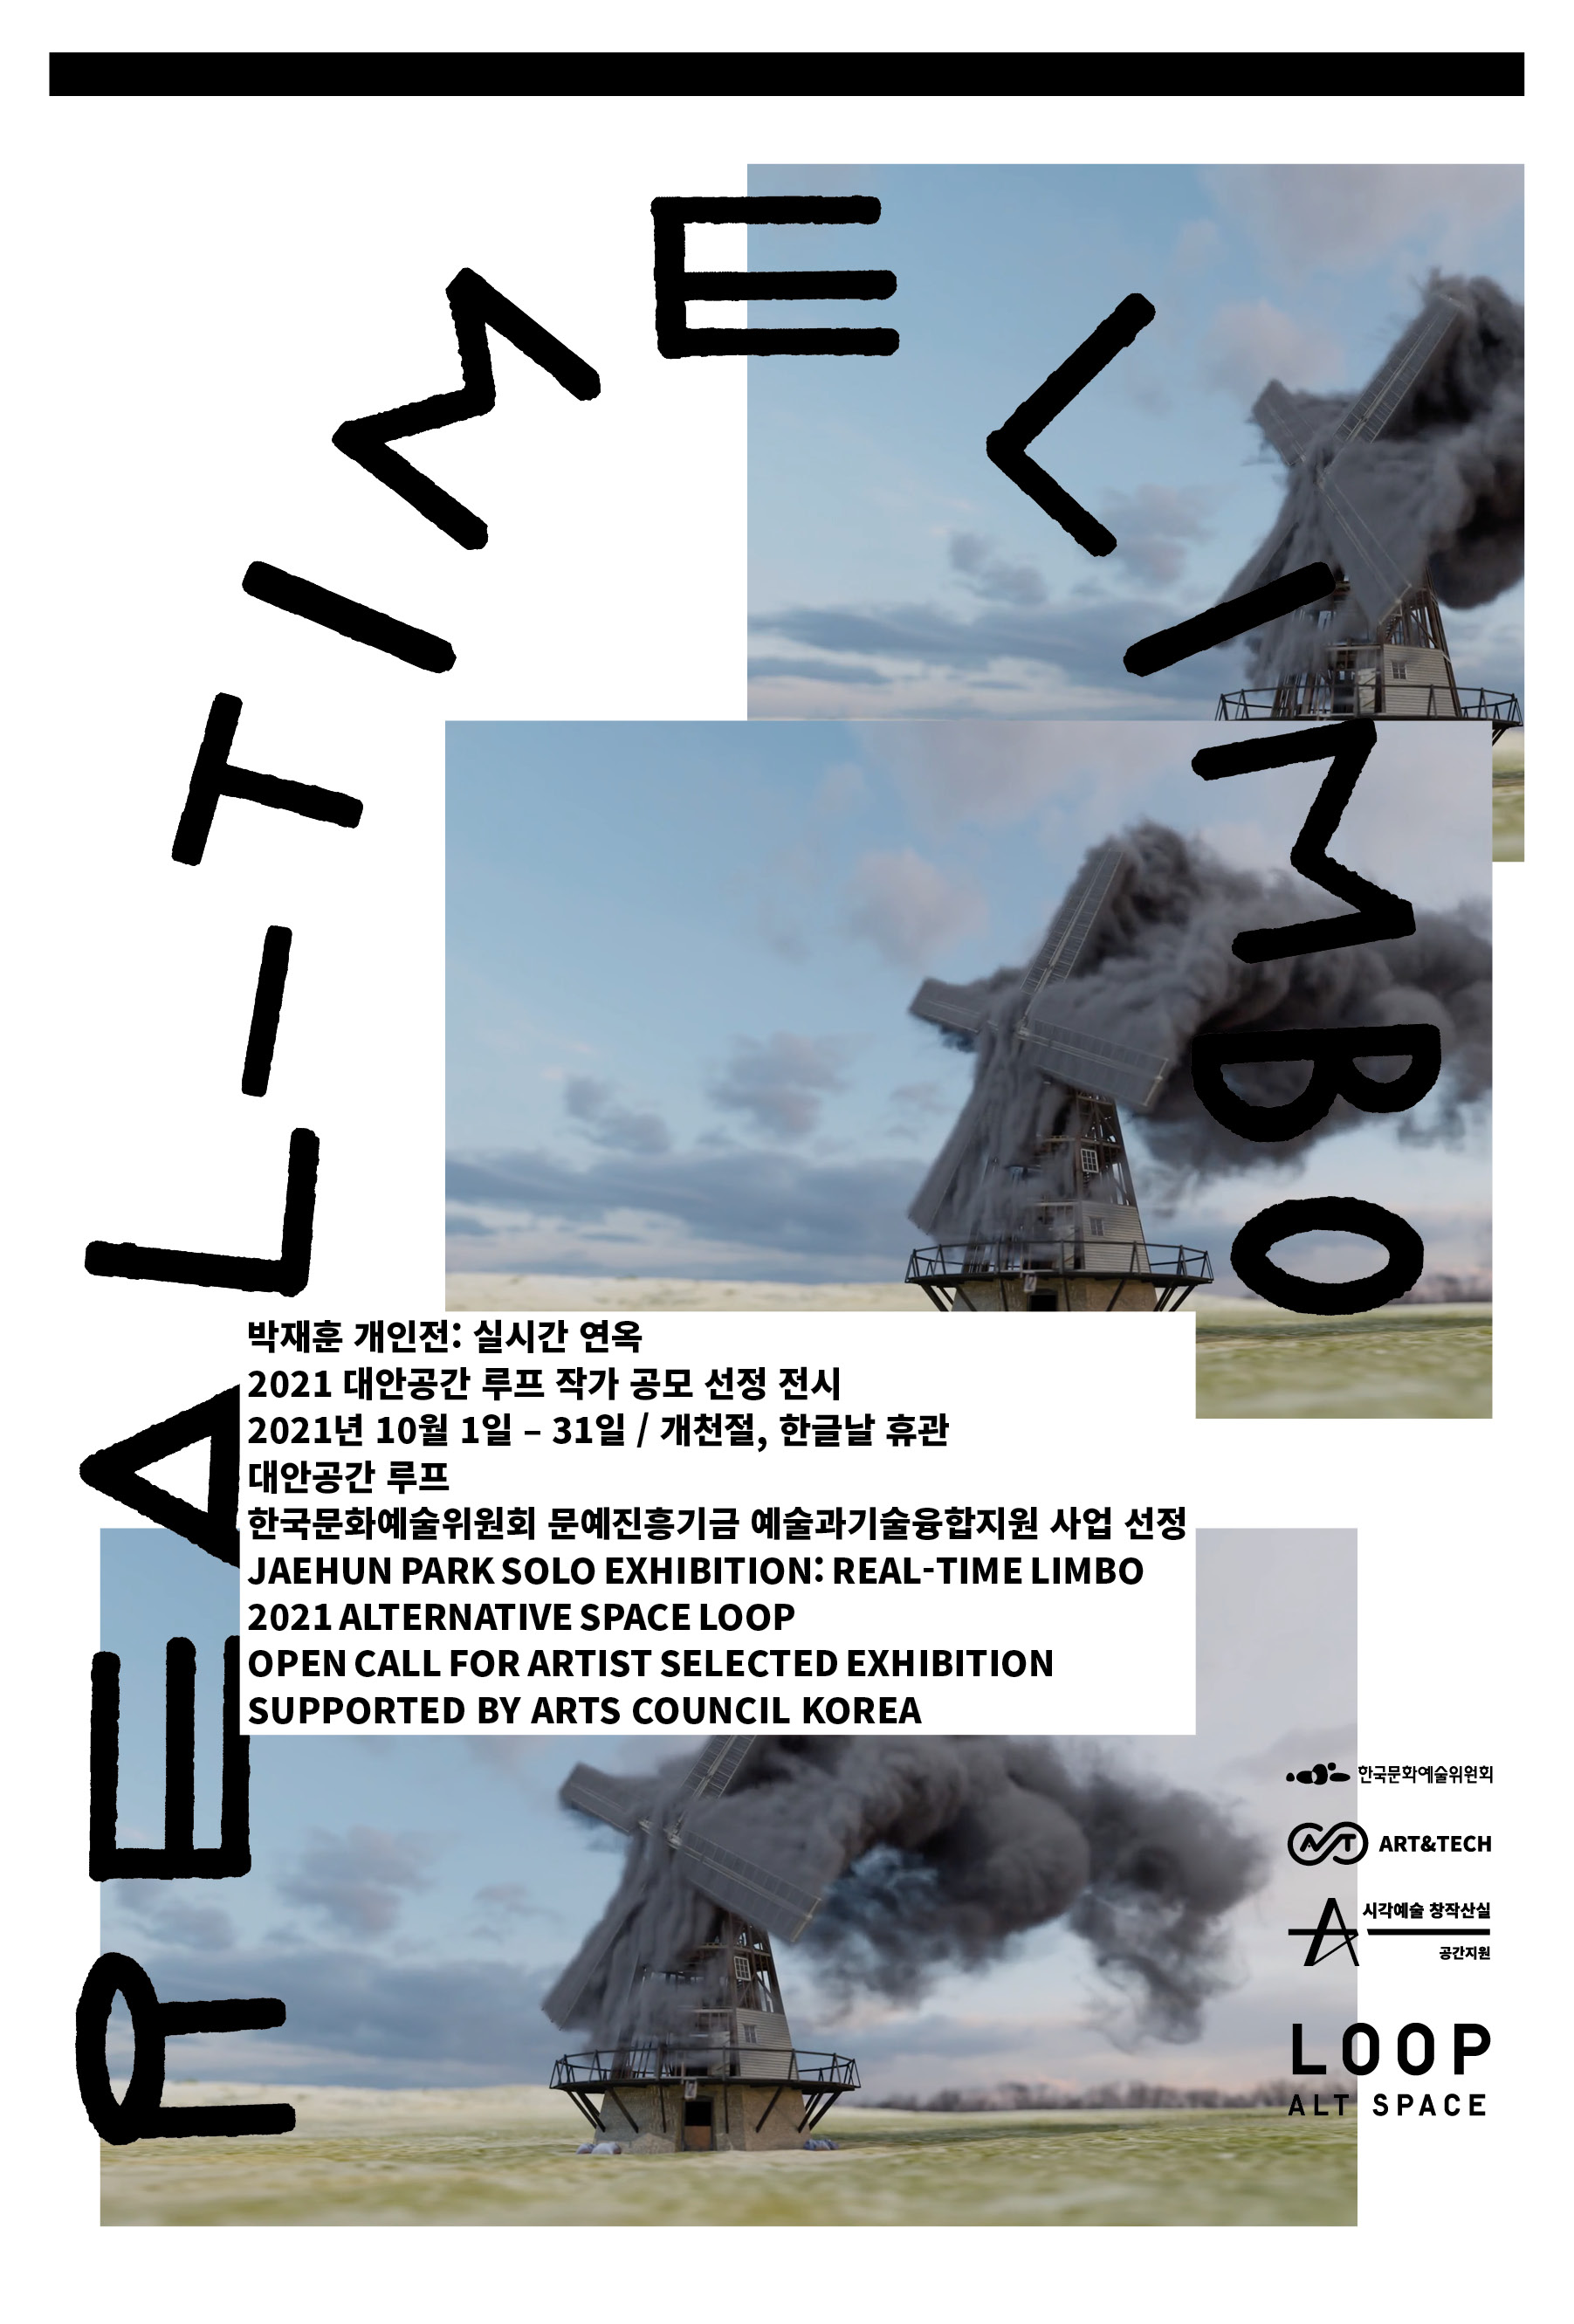 Jaehun Park Solo Exhibition: Real-time Limbo